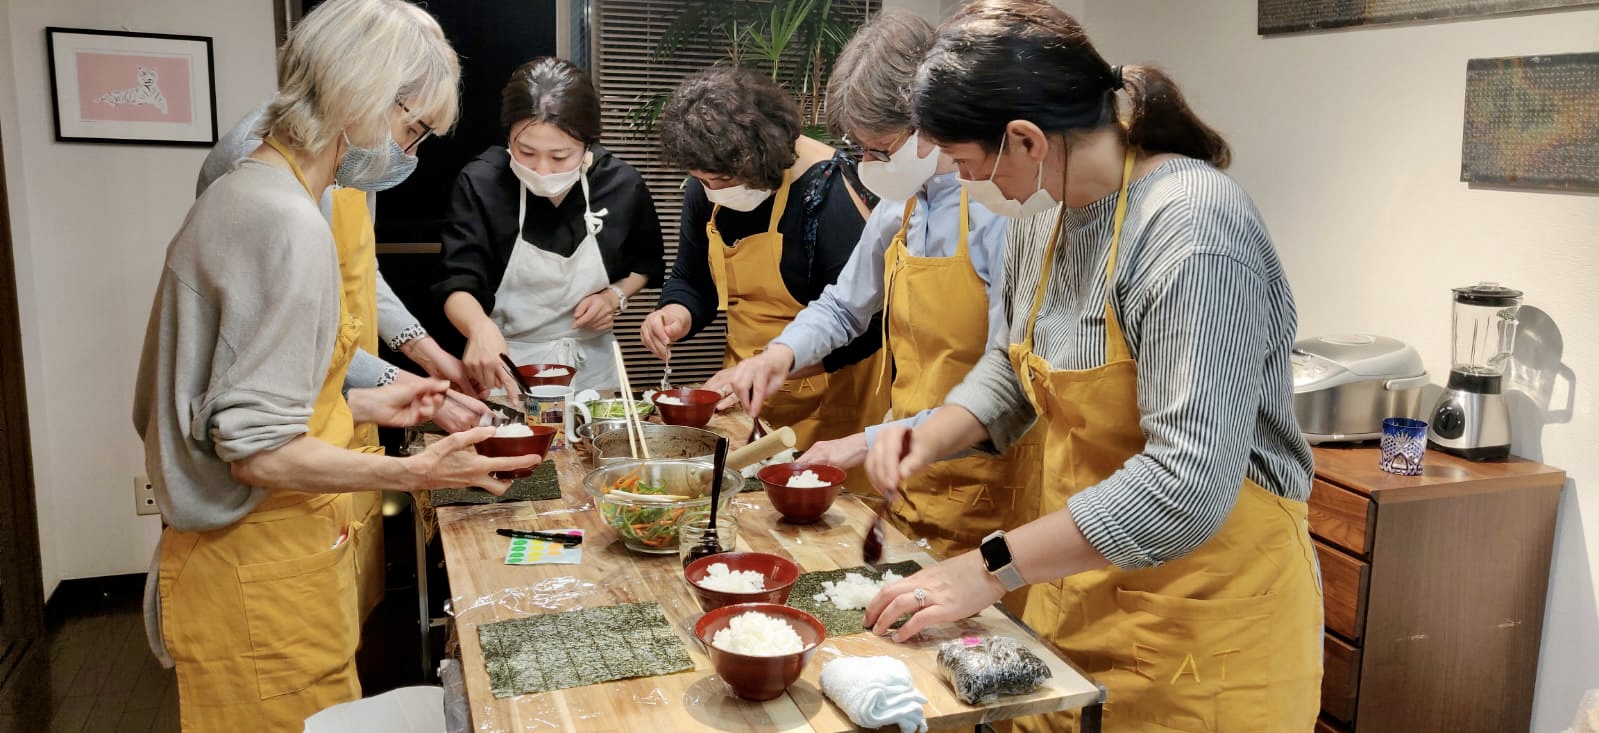 mayuko's-little-kitchen-tokyo-japan-metropolis